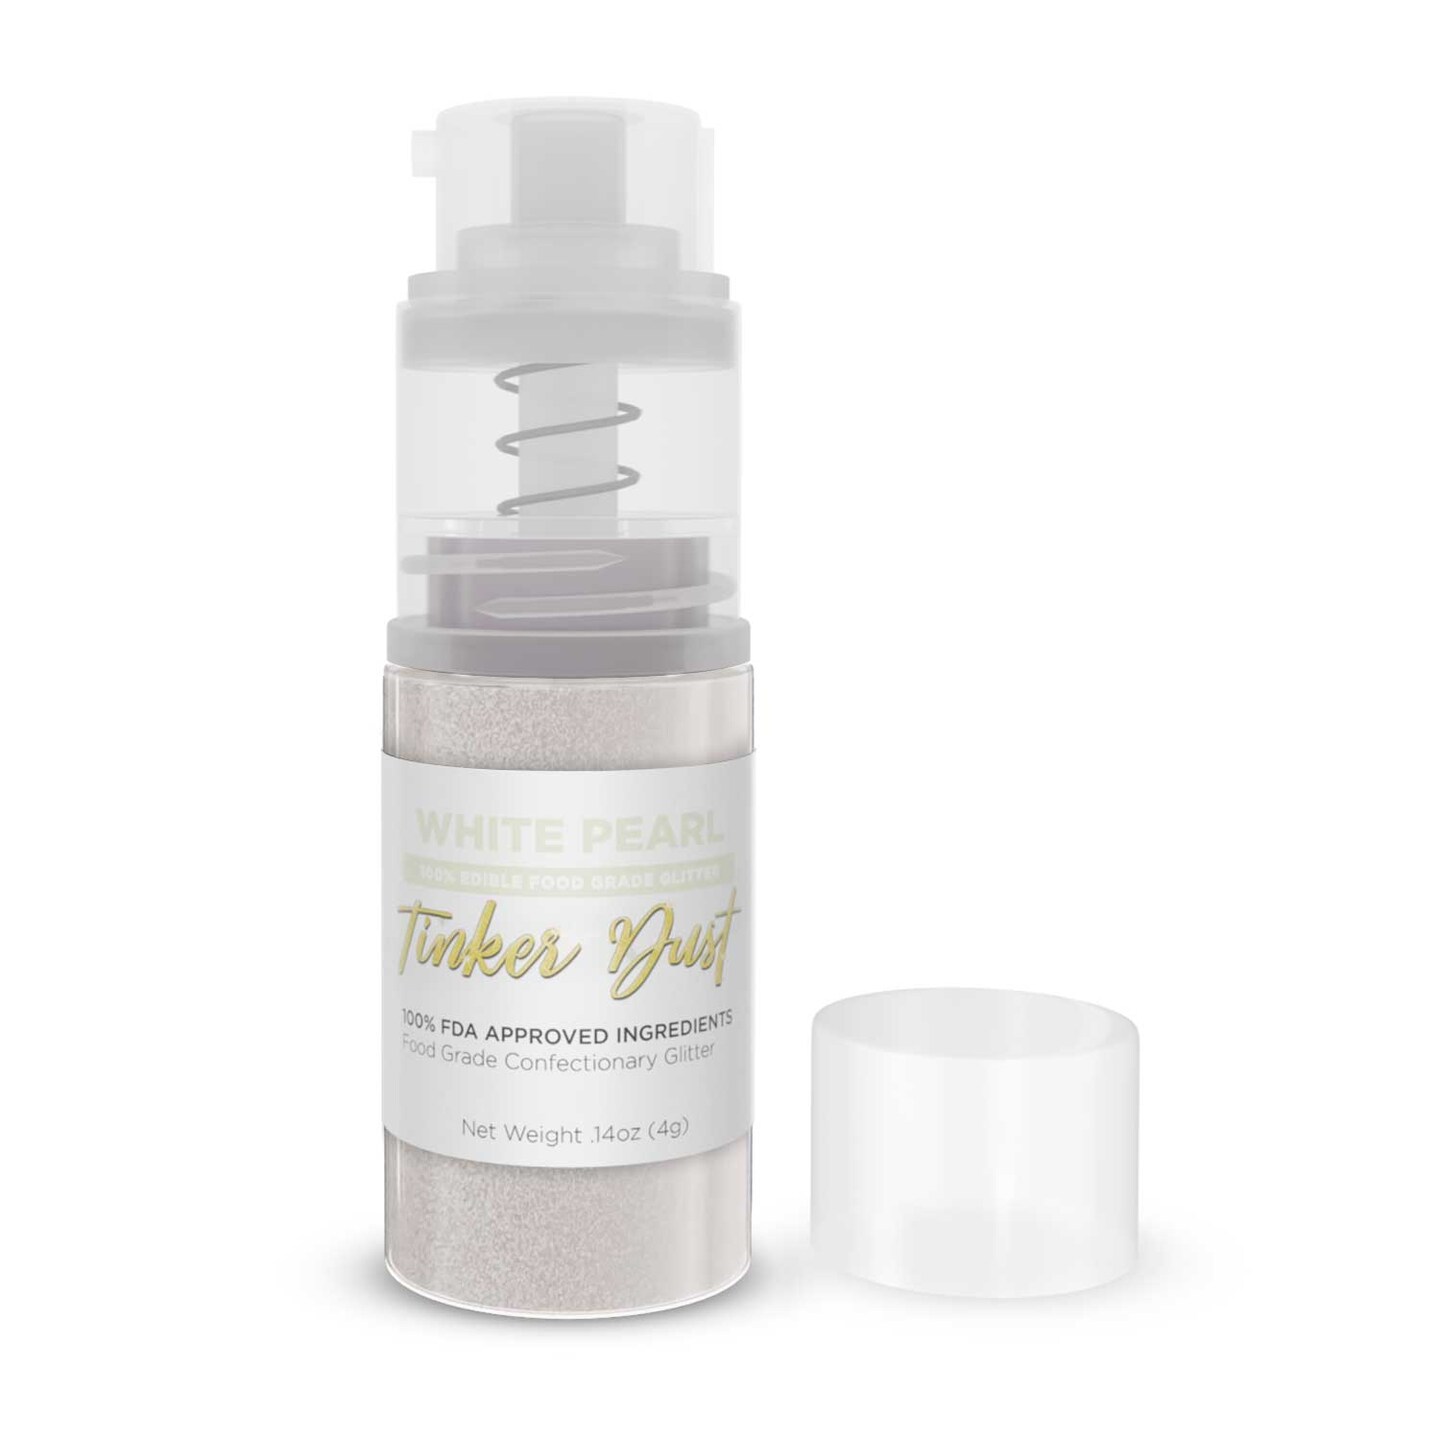 White Pearl Edible Glitter Spray - Edible Powder Dust Spray Glitter for Food, Drinks, Strawberries, Muffins, Cake Decorating. FDA Compliant (4 Gram Pump)